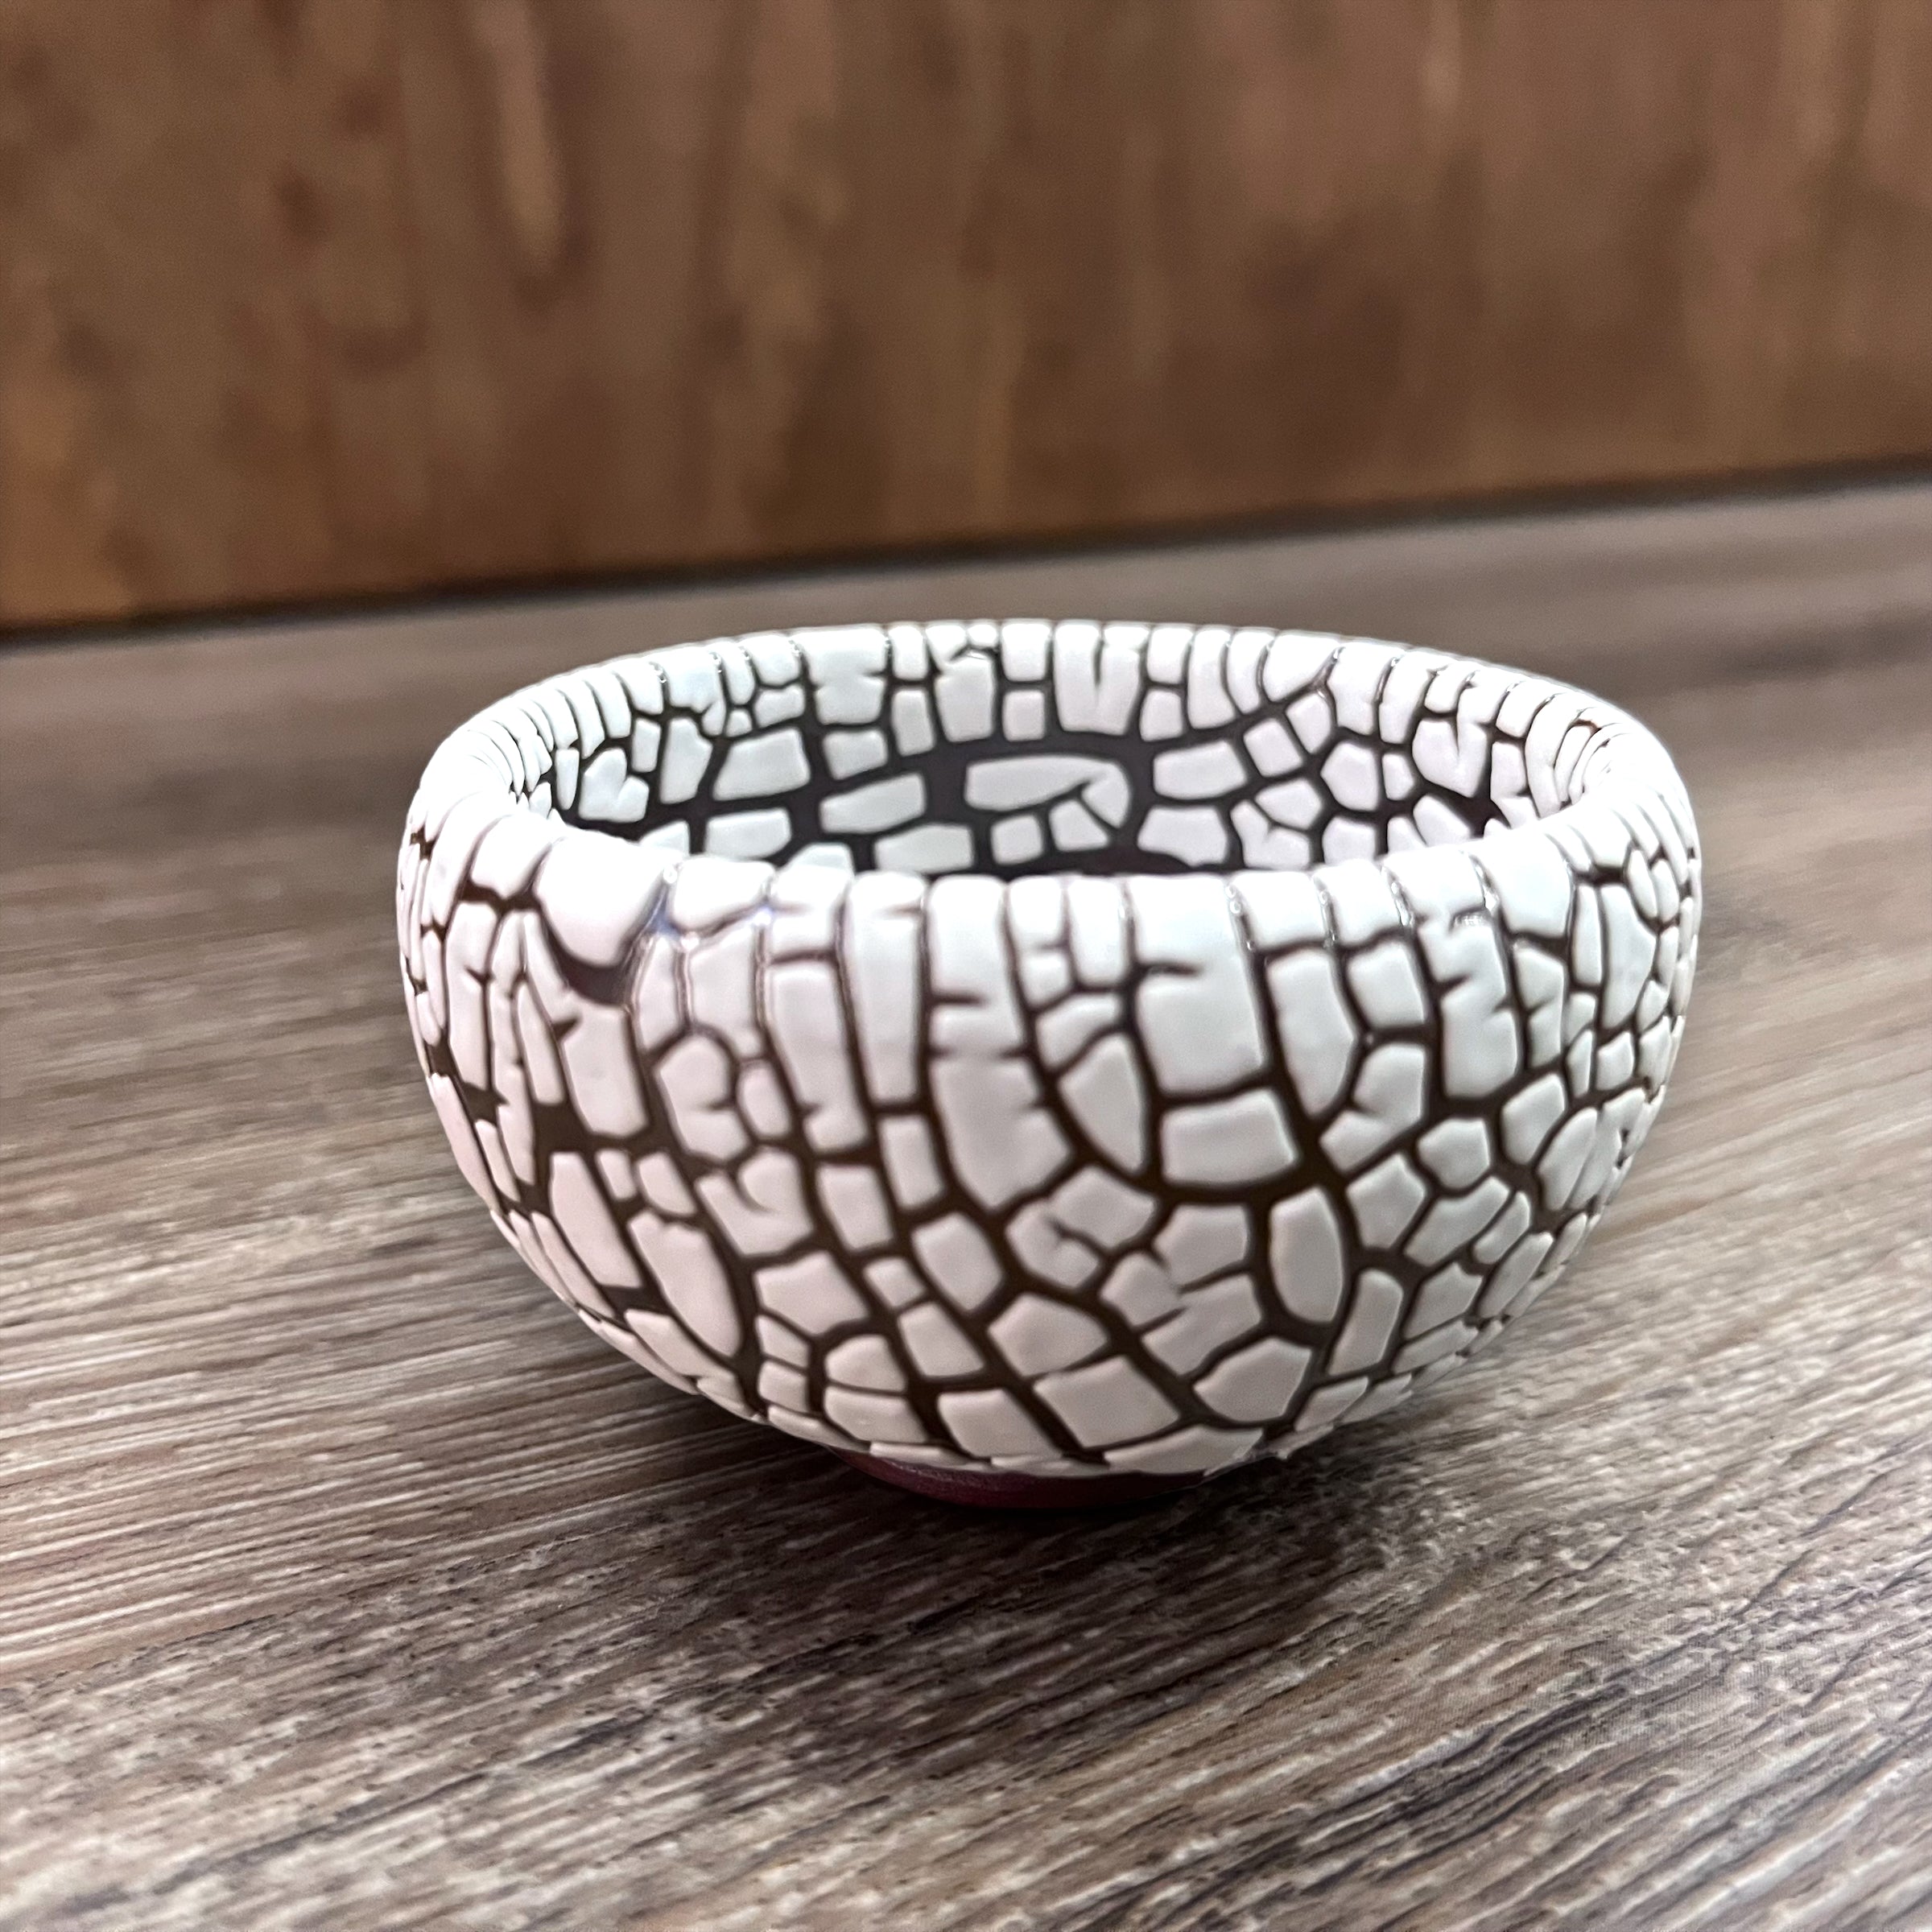 Taiwanese Handmade Wood-fired Ceramic Clay Teacup - Maze